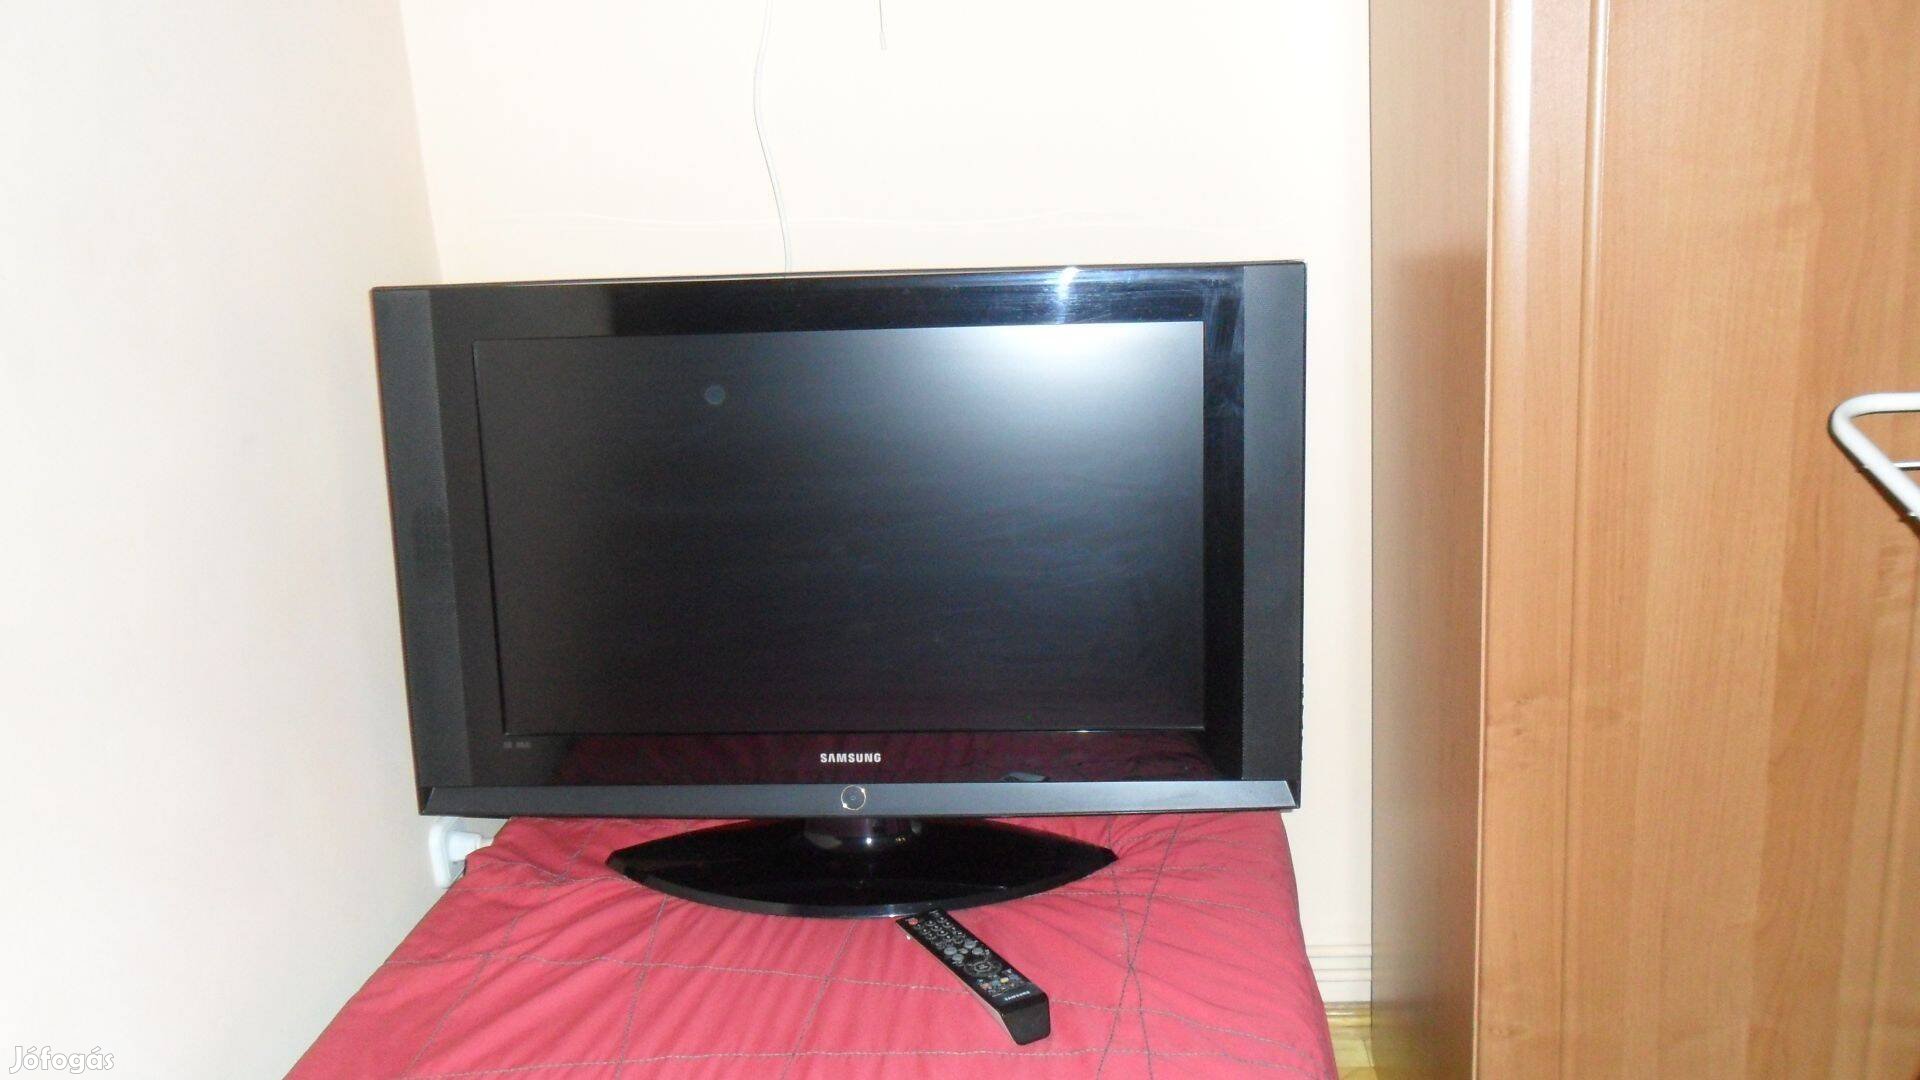 Samsung 80 cm. LCD. TV,